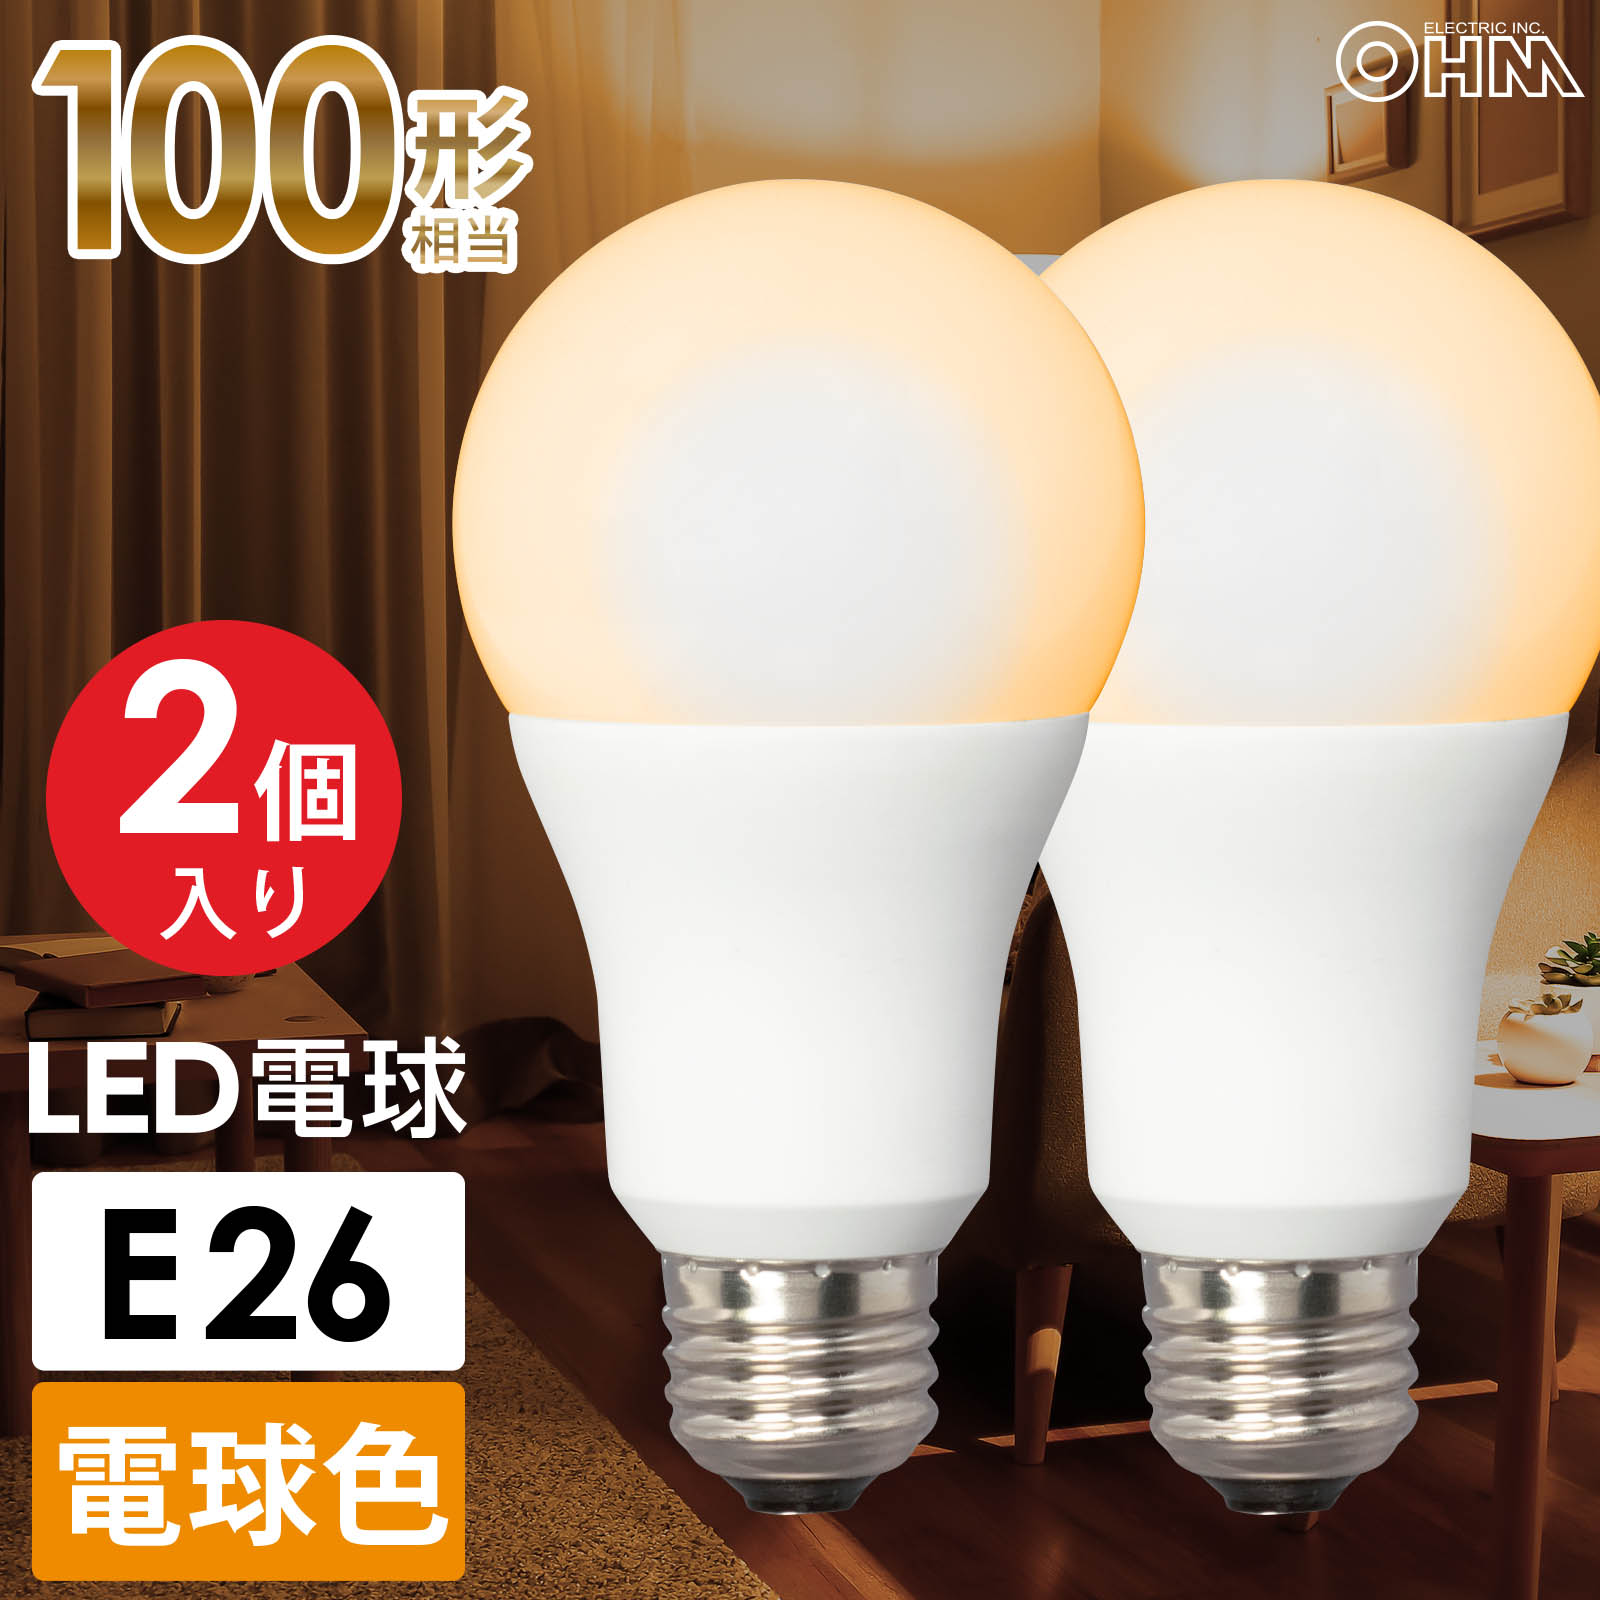 LED電球 E26 100形相当 電球色 広配光 2個入｜LDA13L-G AG52 2P 06-4710 オーム電機 1